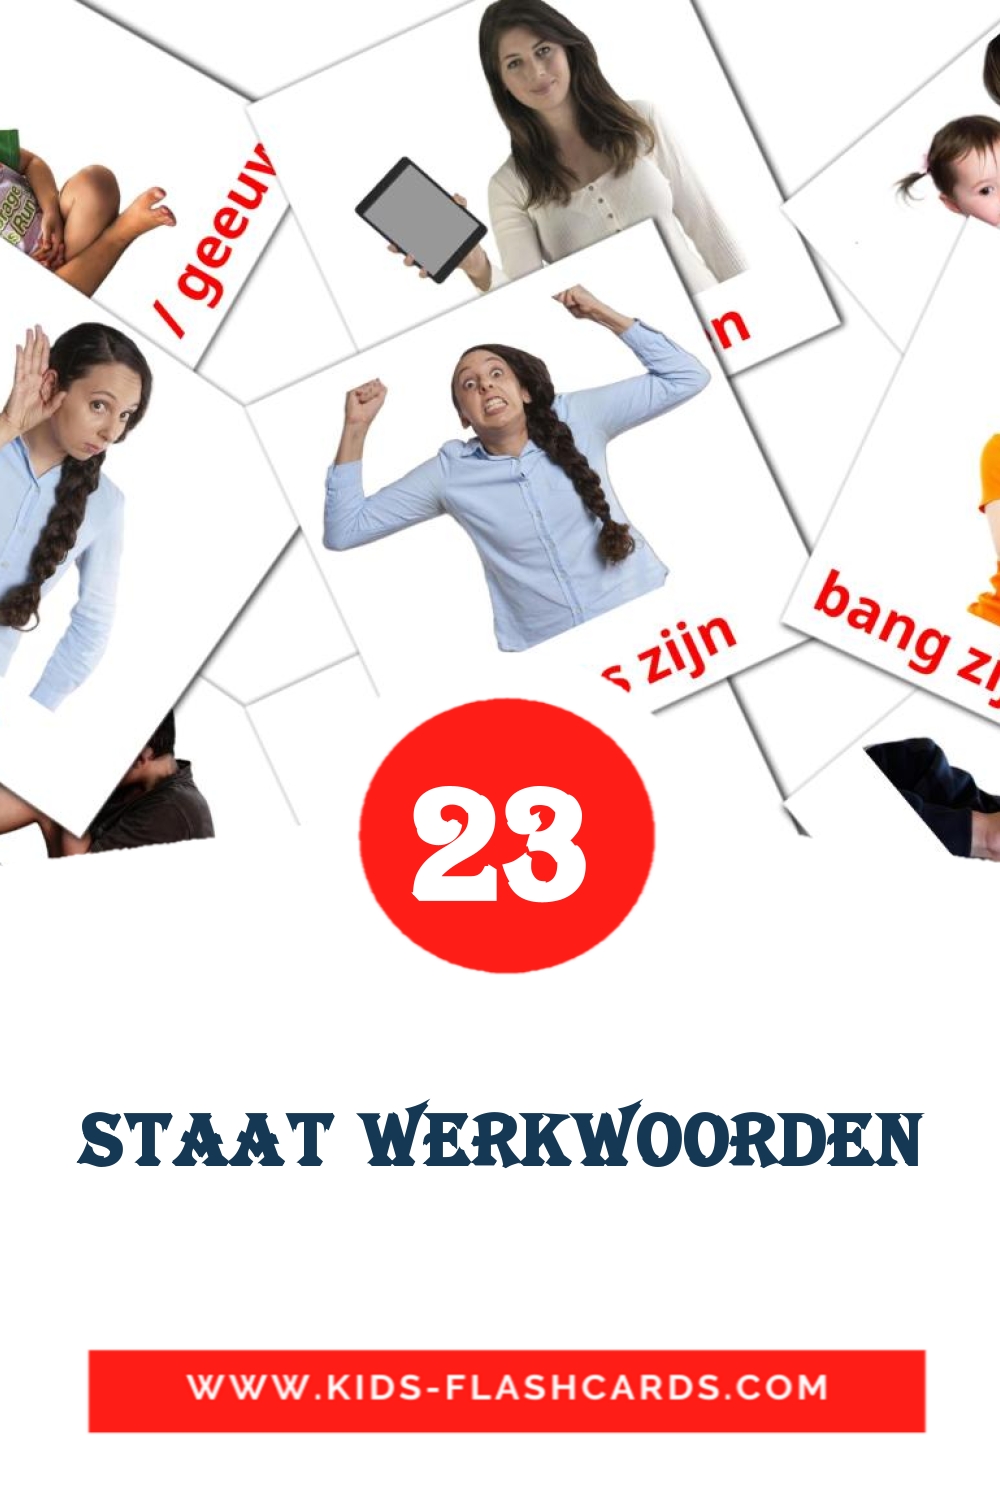 23 carte illustrate di Staat werkwoorden per la scuola materna in olandese